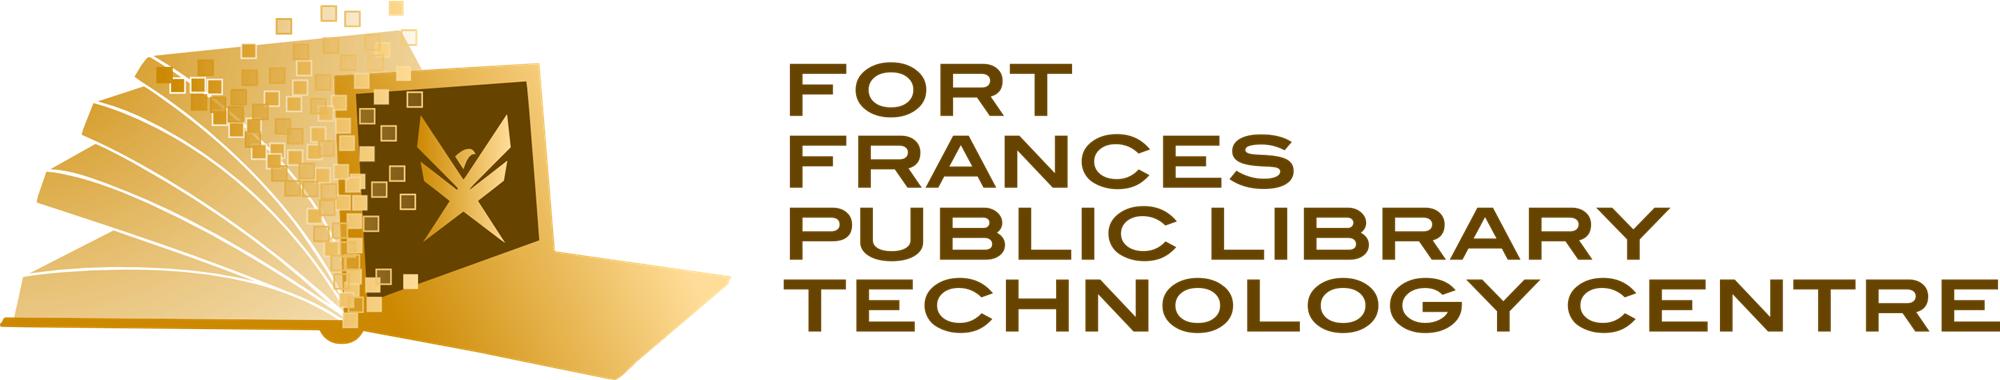 Fort Frances Public Library Technology Centre